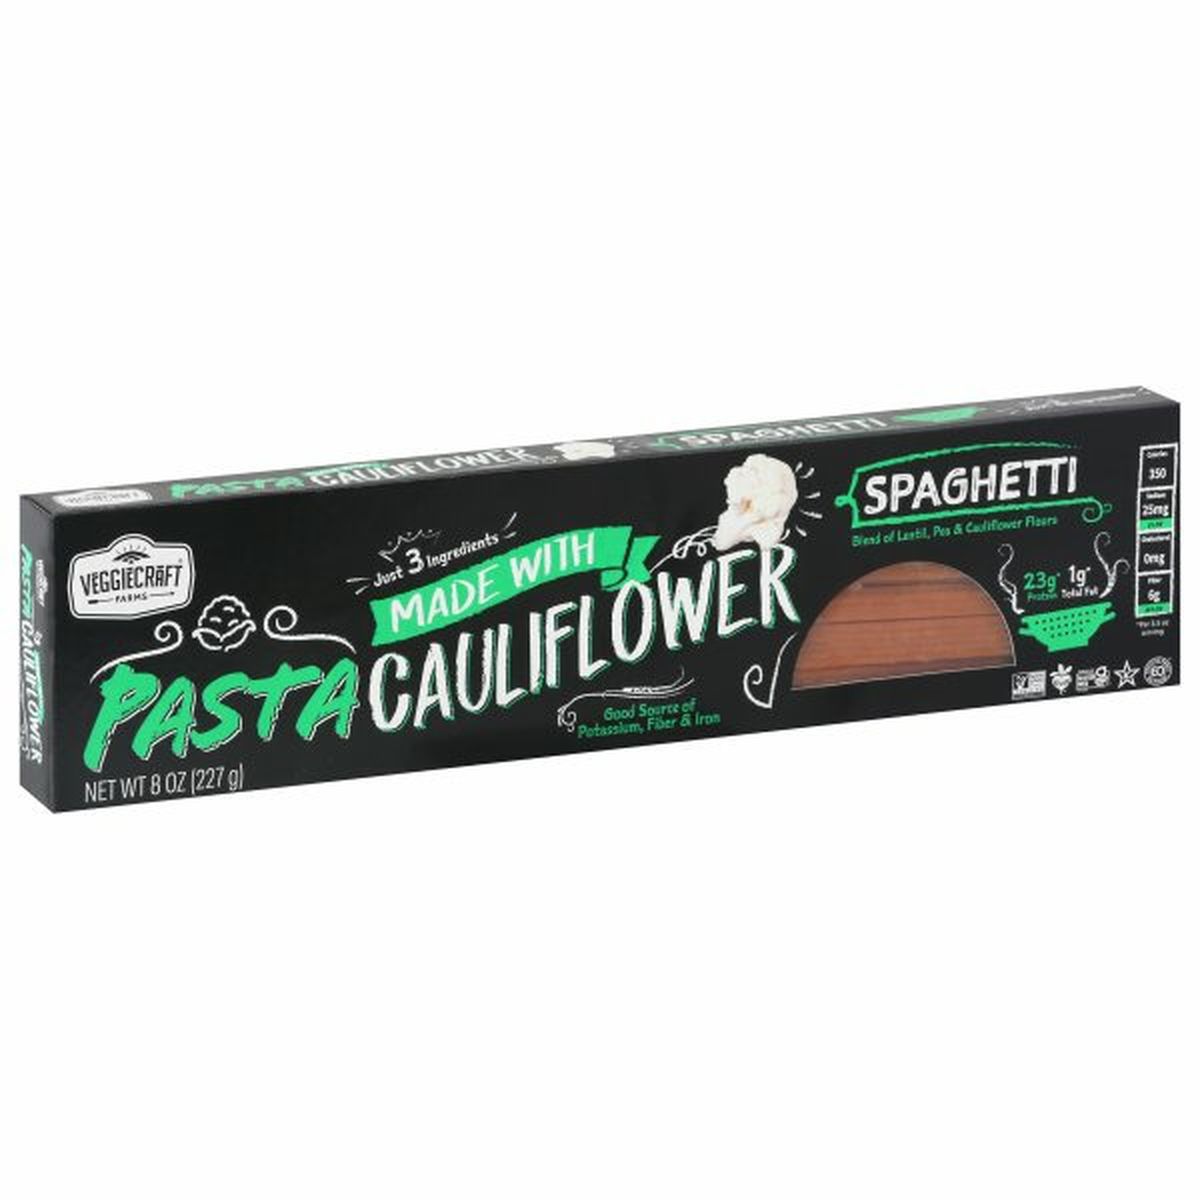 Calories in Veggiecraft Farms Pasta, Spaghetti, Made with Cauliflower